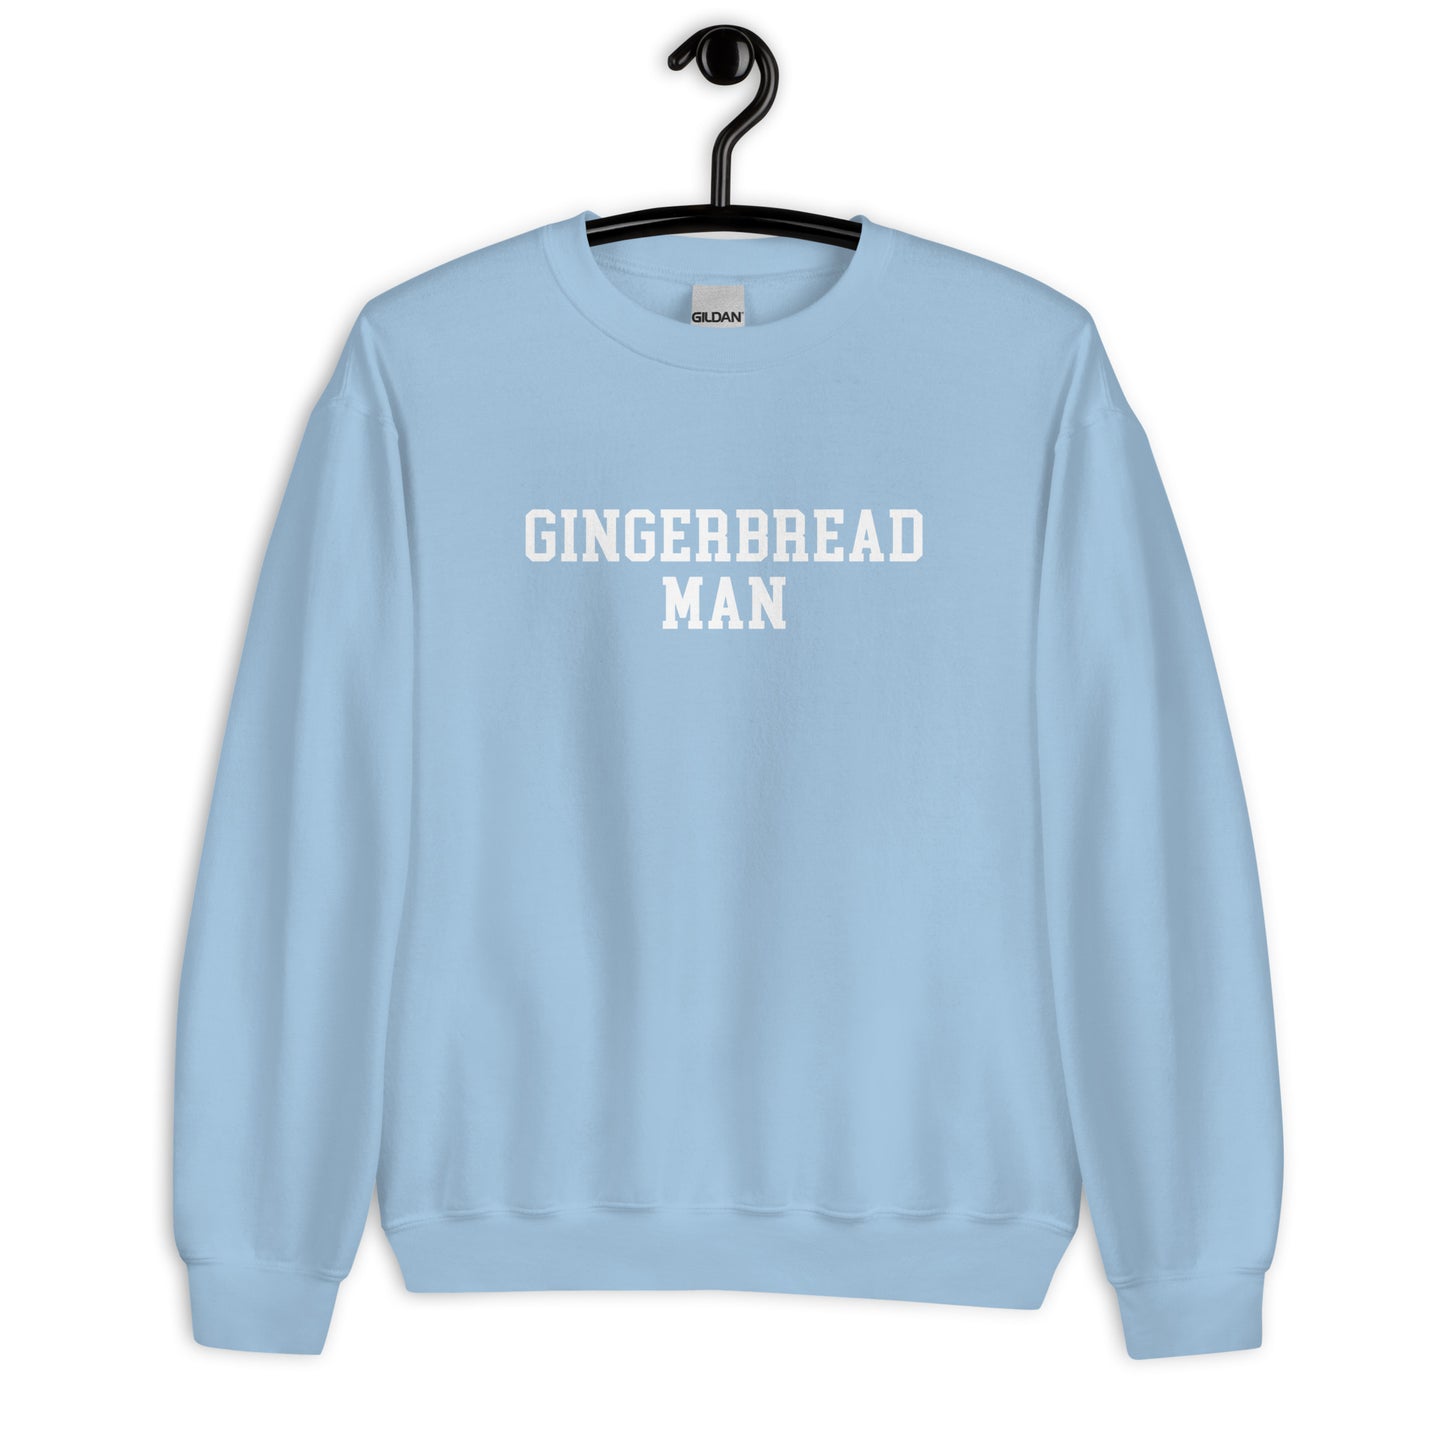 Gingerbread Man Sweatshirt - Straight Font